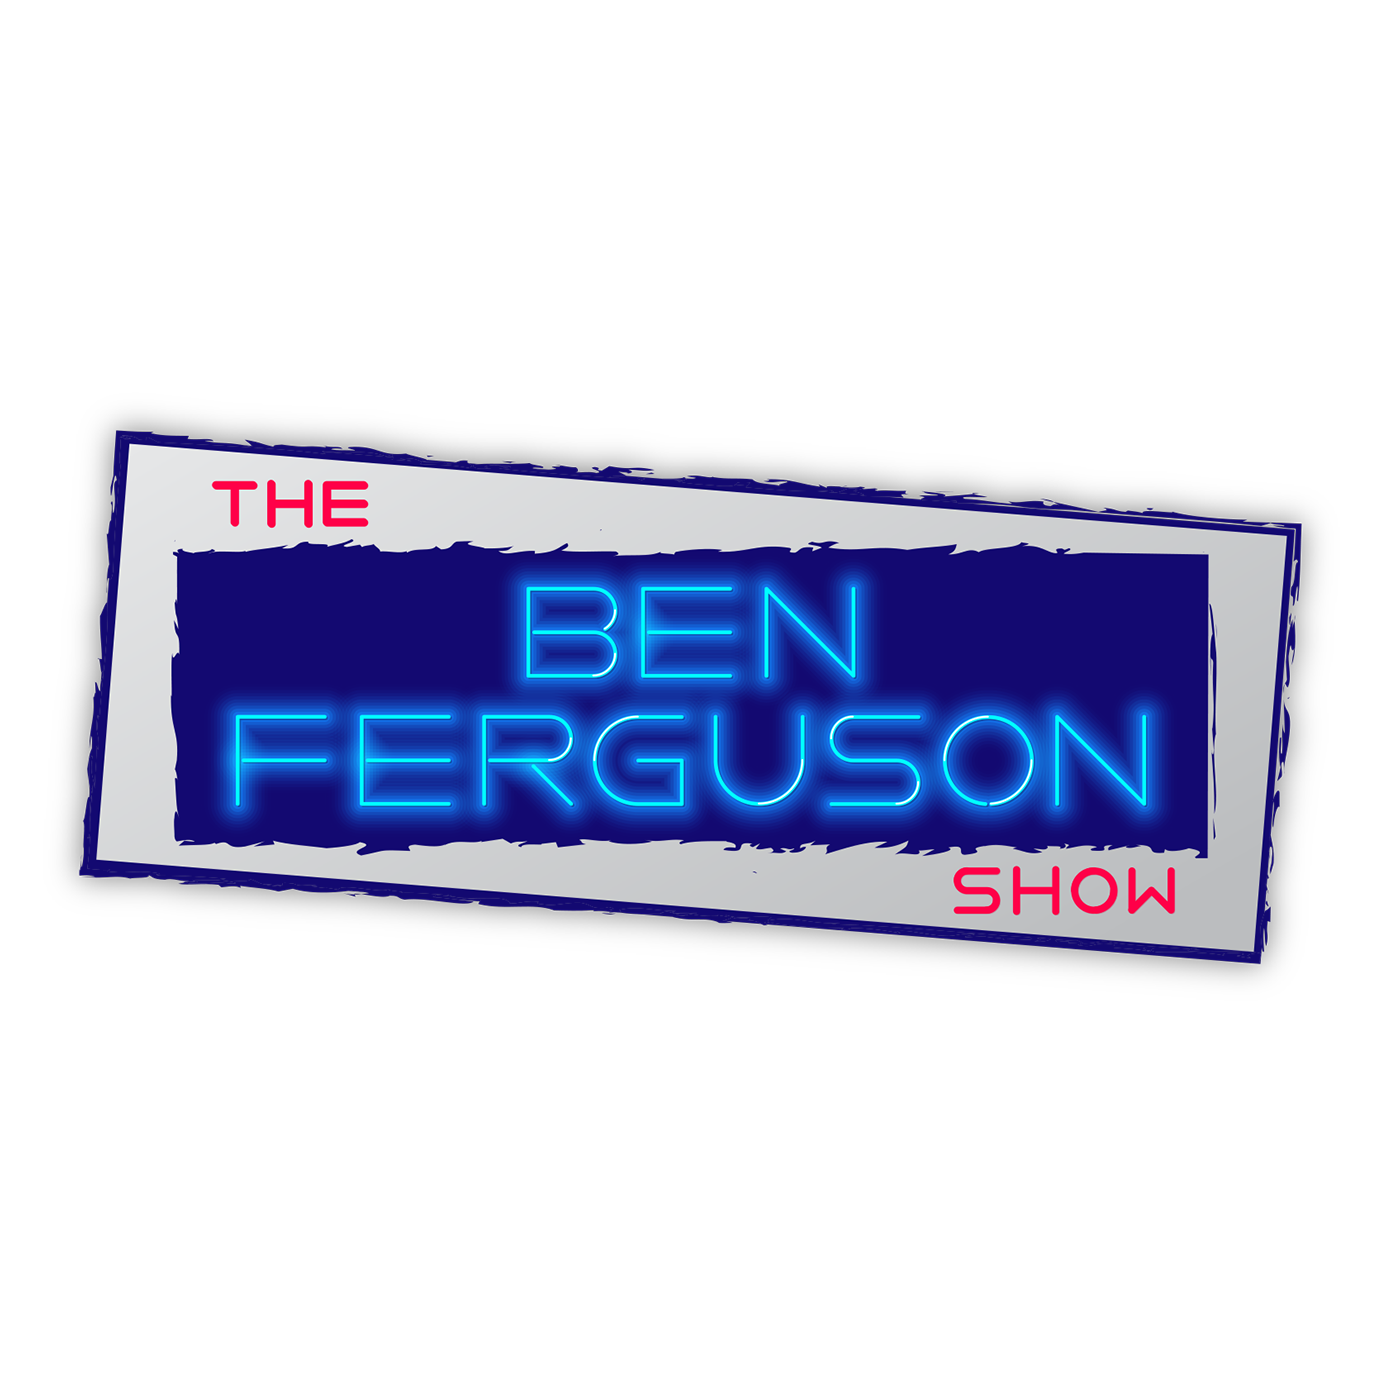 The Ben Ferguson Show joins News Talk 1400 Sundays at 7 p.m.